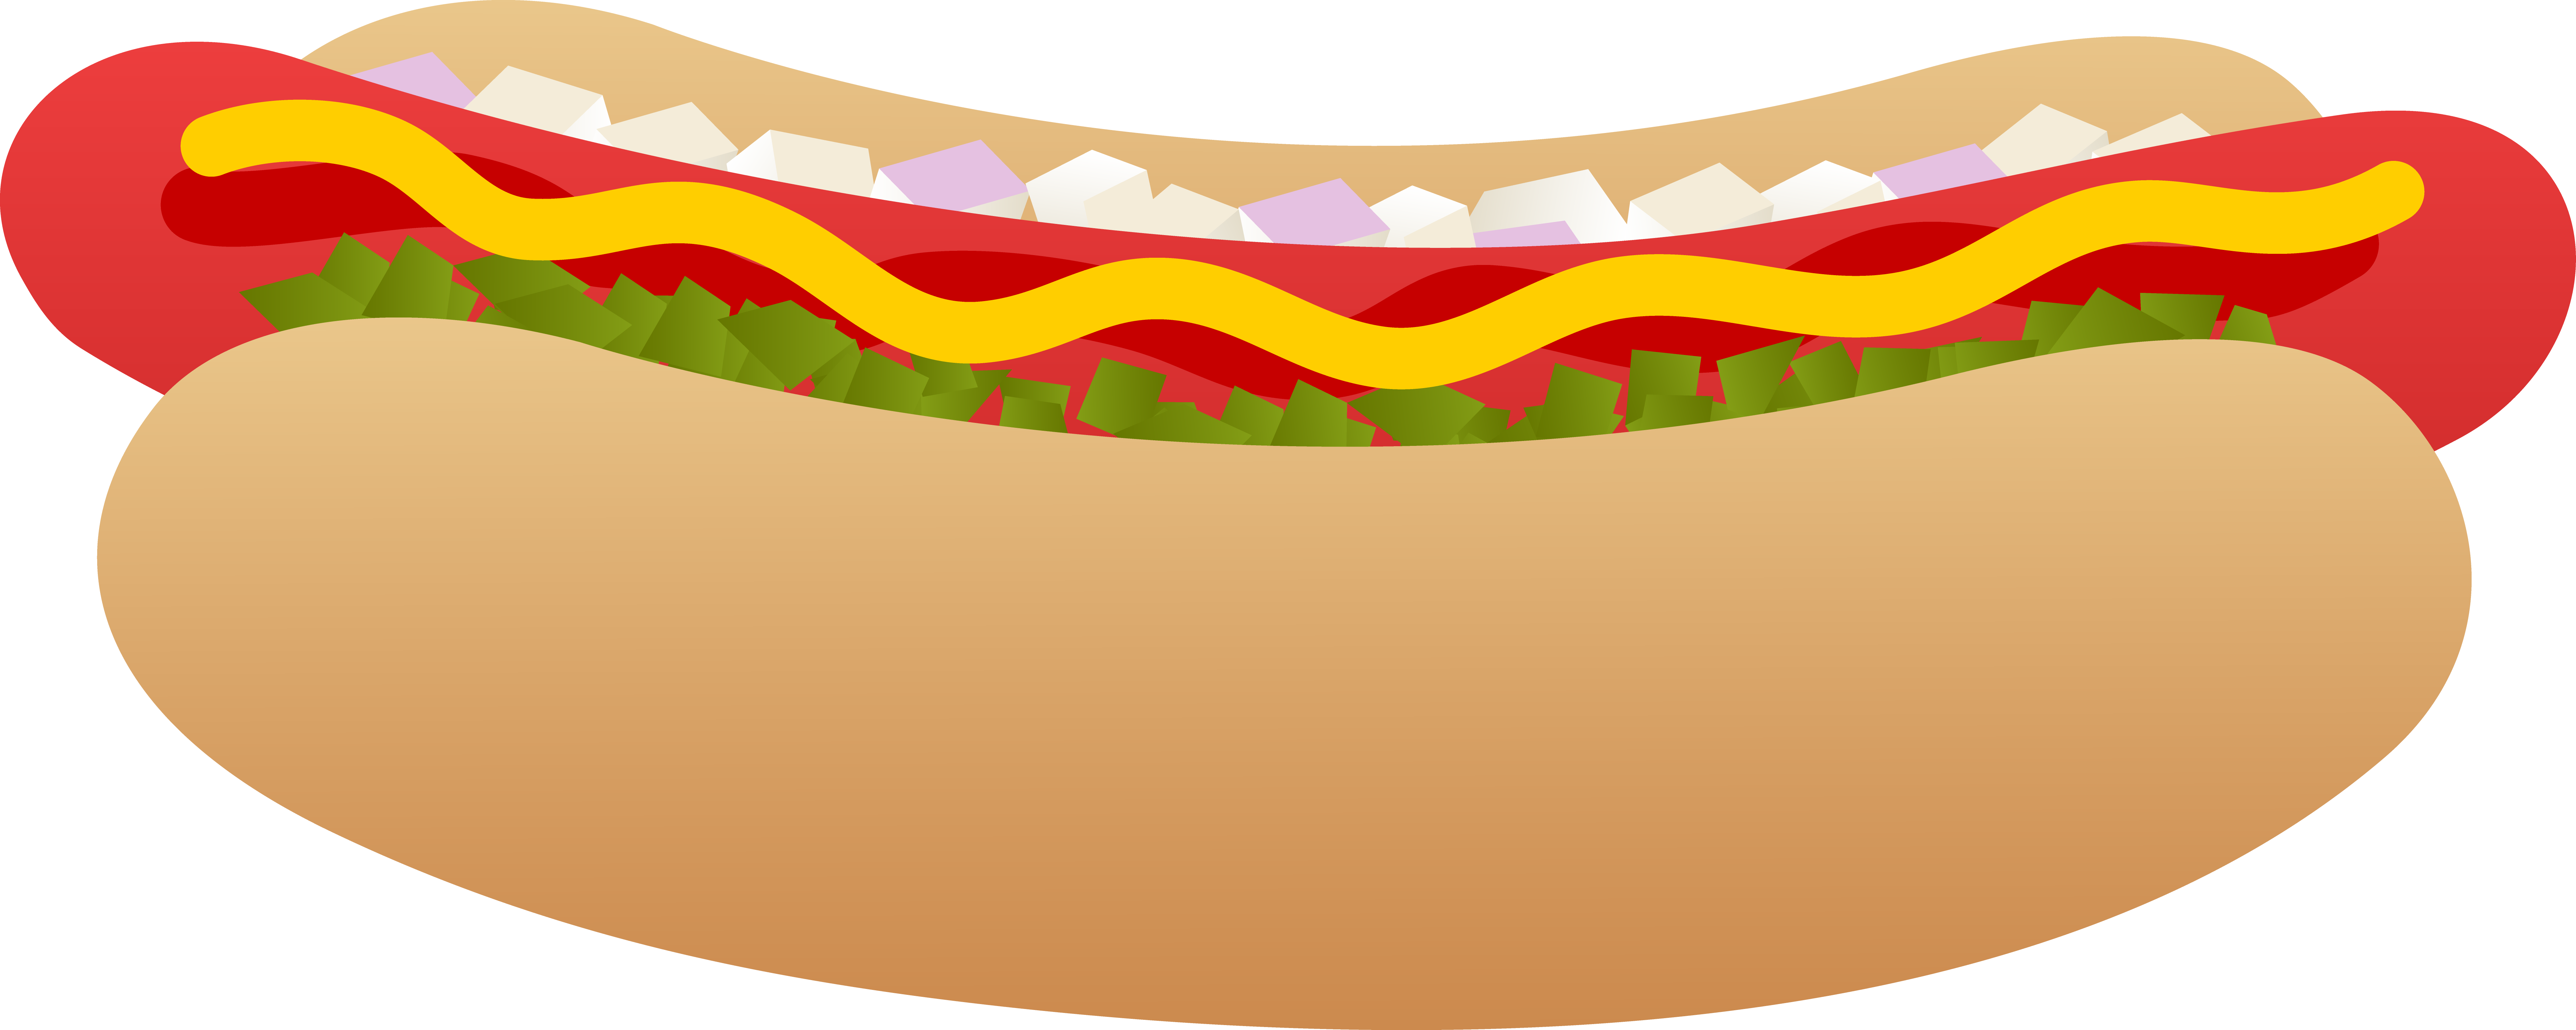 Best hot dog.